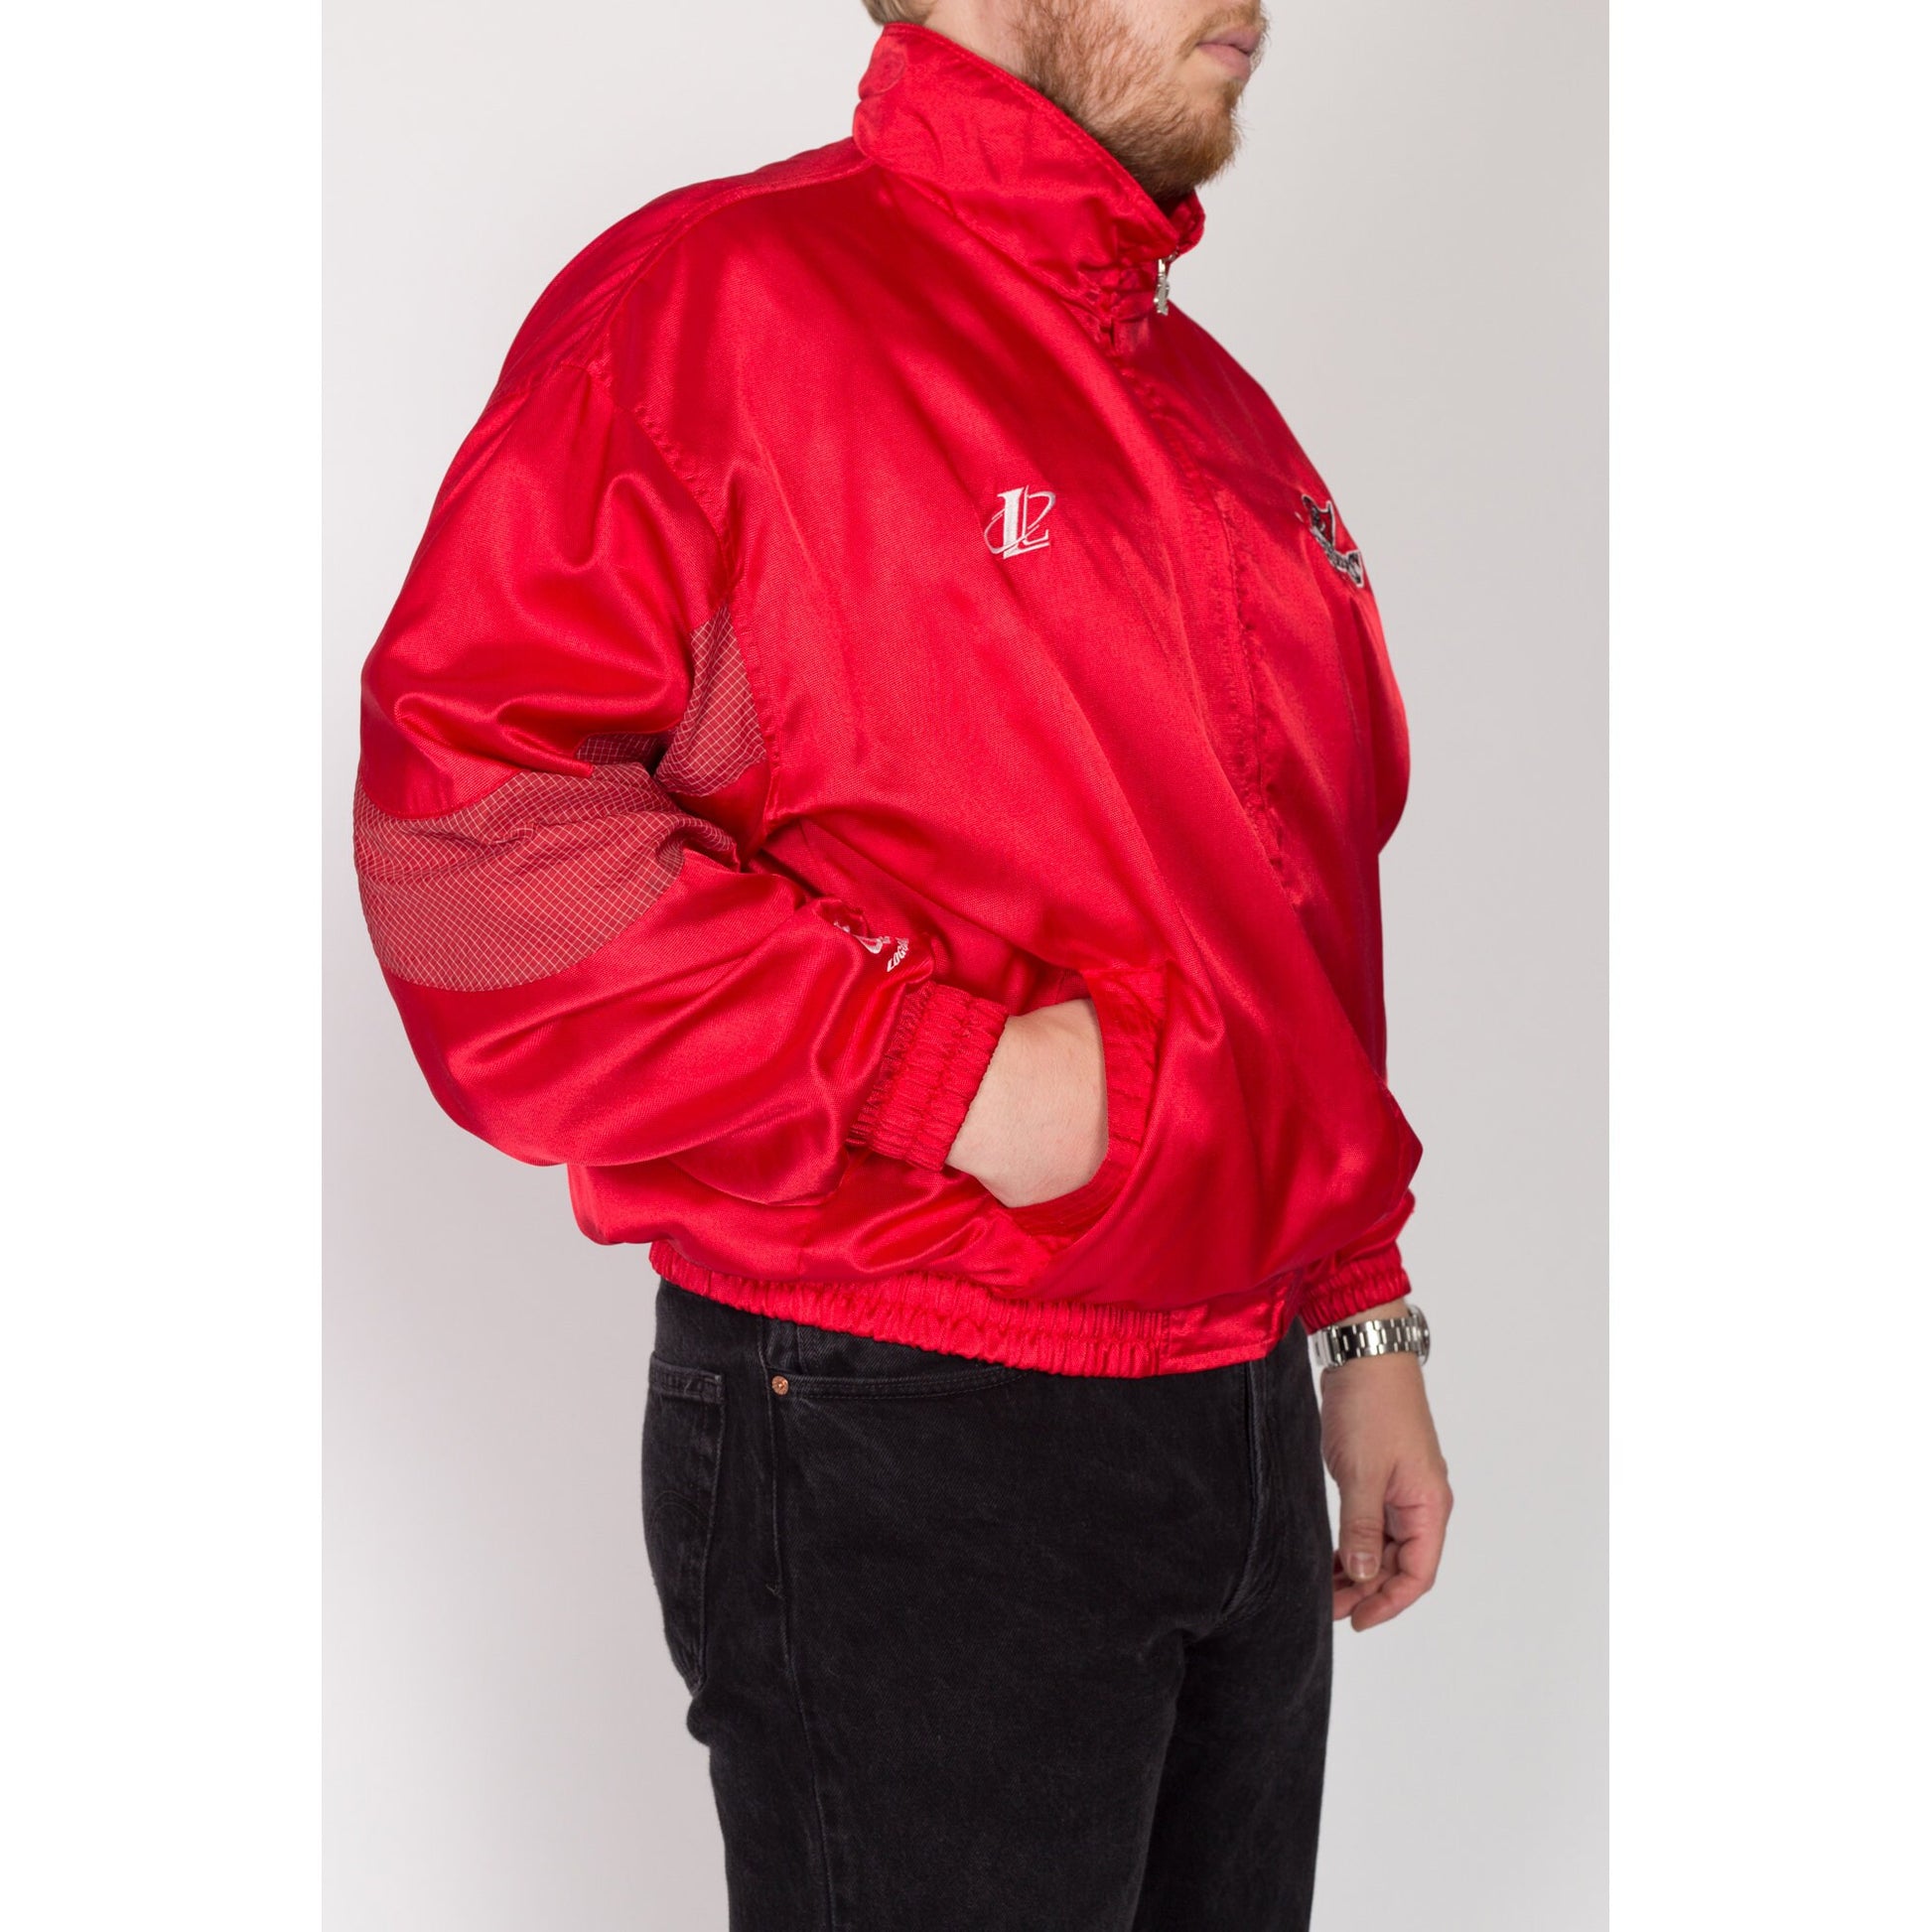 2X 90s Tampa Bay Buccaneers NFL Pro Line Red Satin Jacket | Vintage Logo Athletic Football Windbreaker